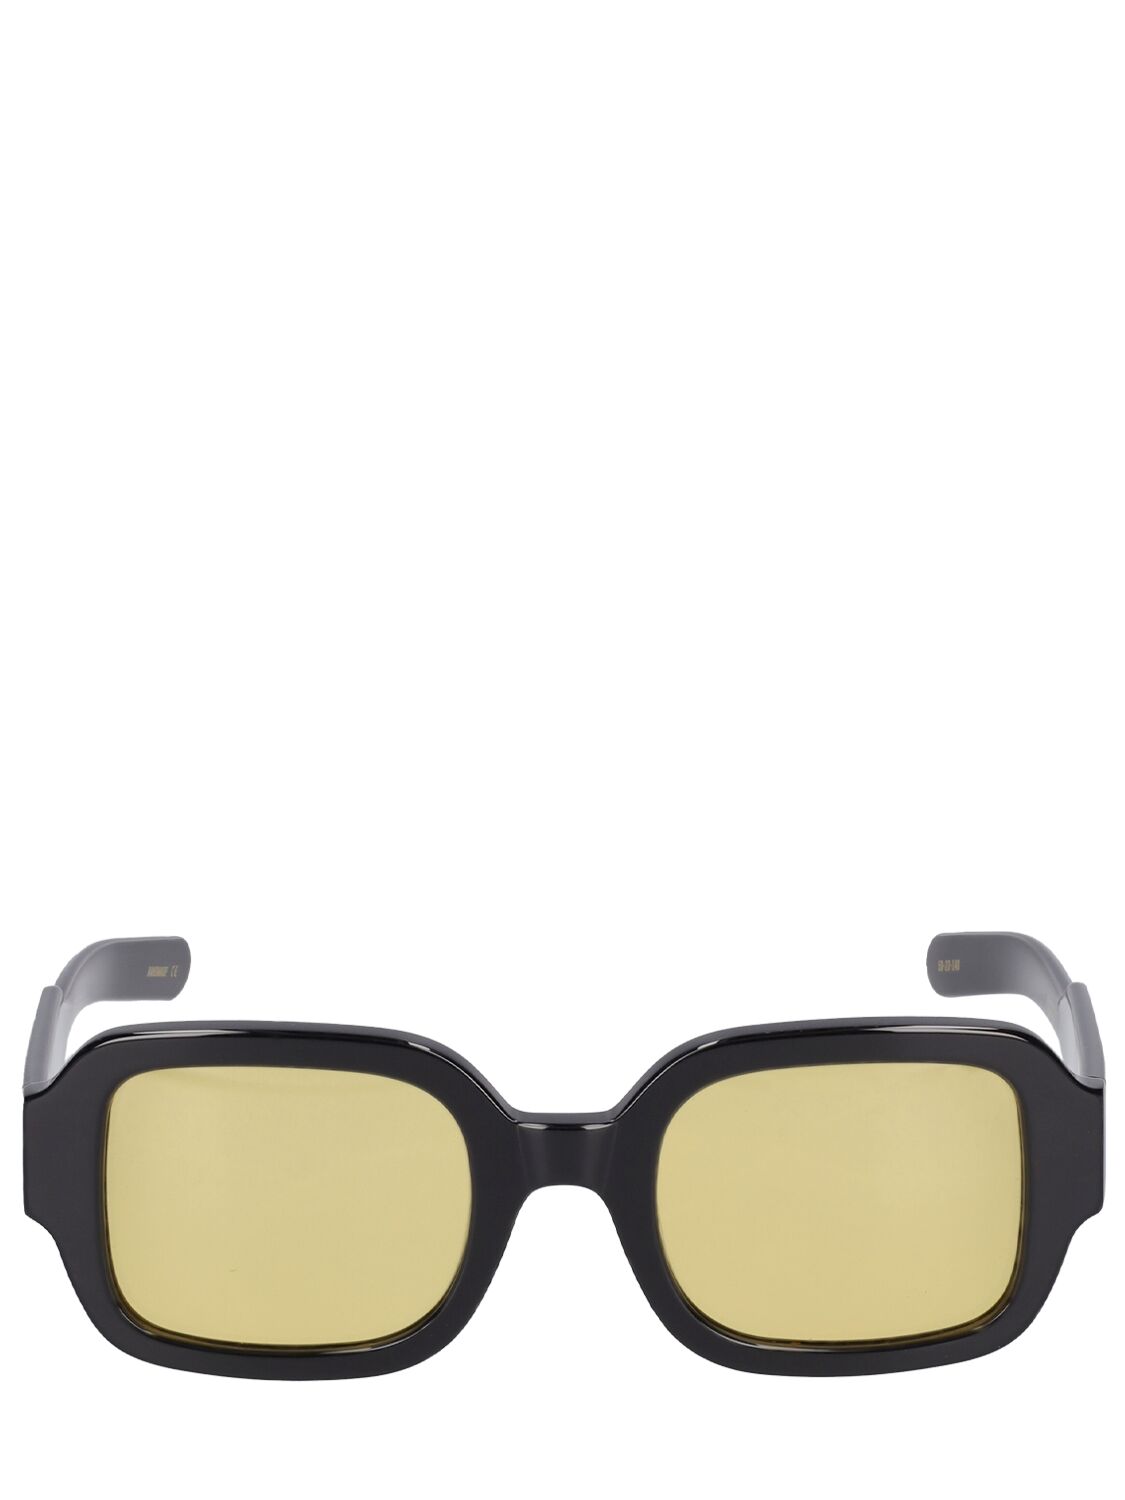 Flatlist Eyewear Tishkoff Sunglasses In Black